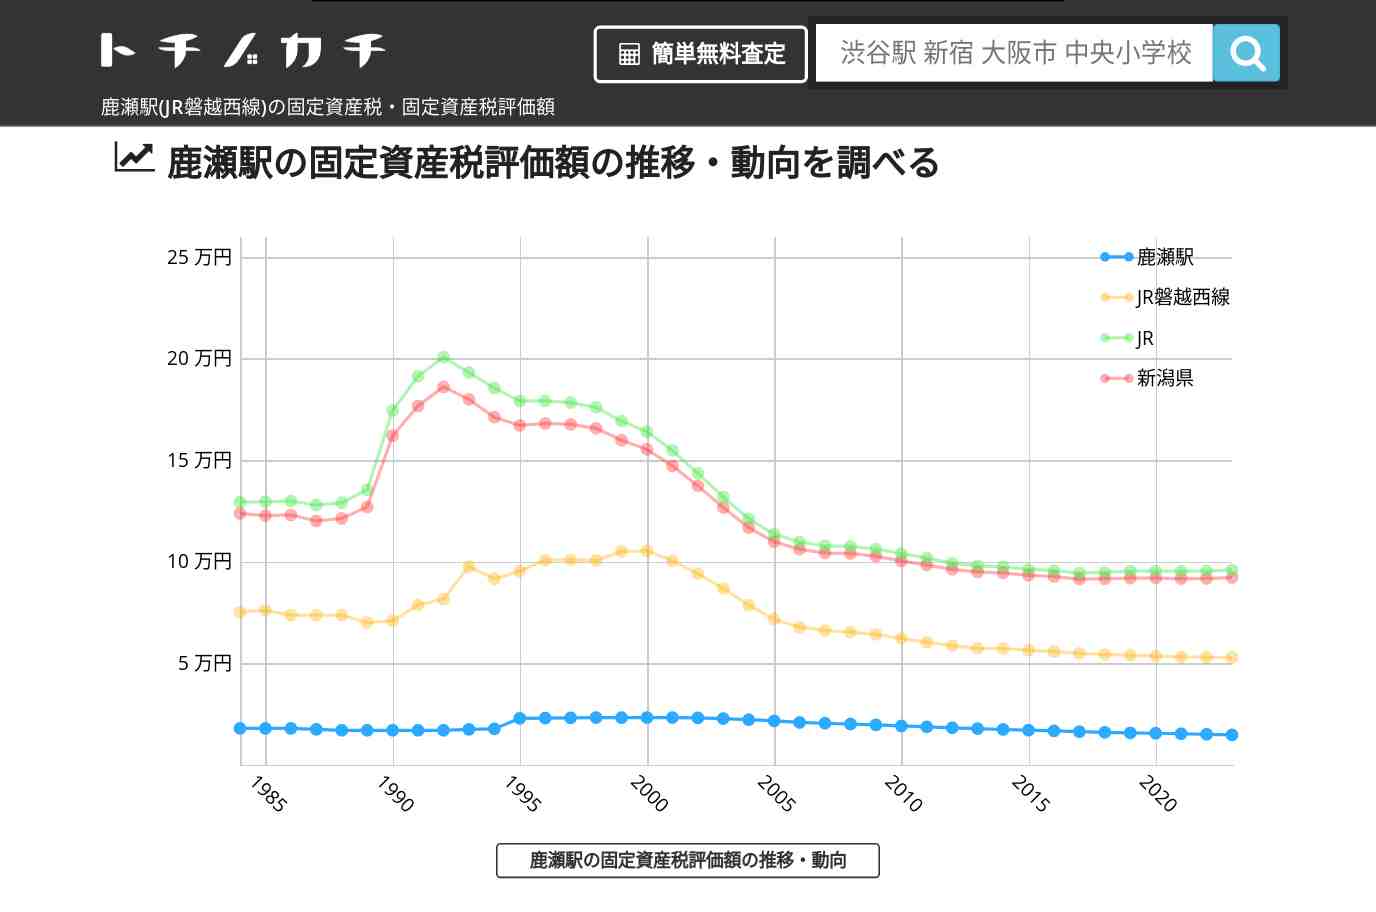 鹿瀬駅(JR磐越西線)の固定資産税・固定資産税評価額 | トチノカチ